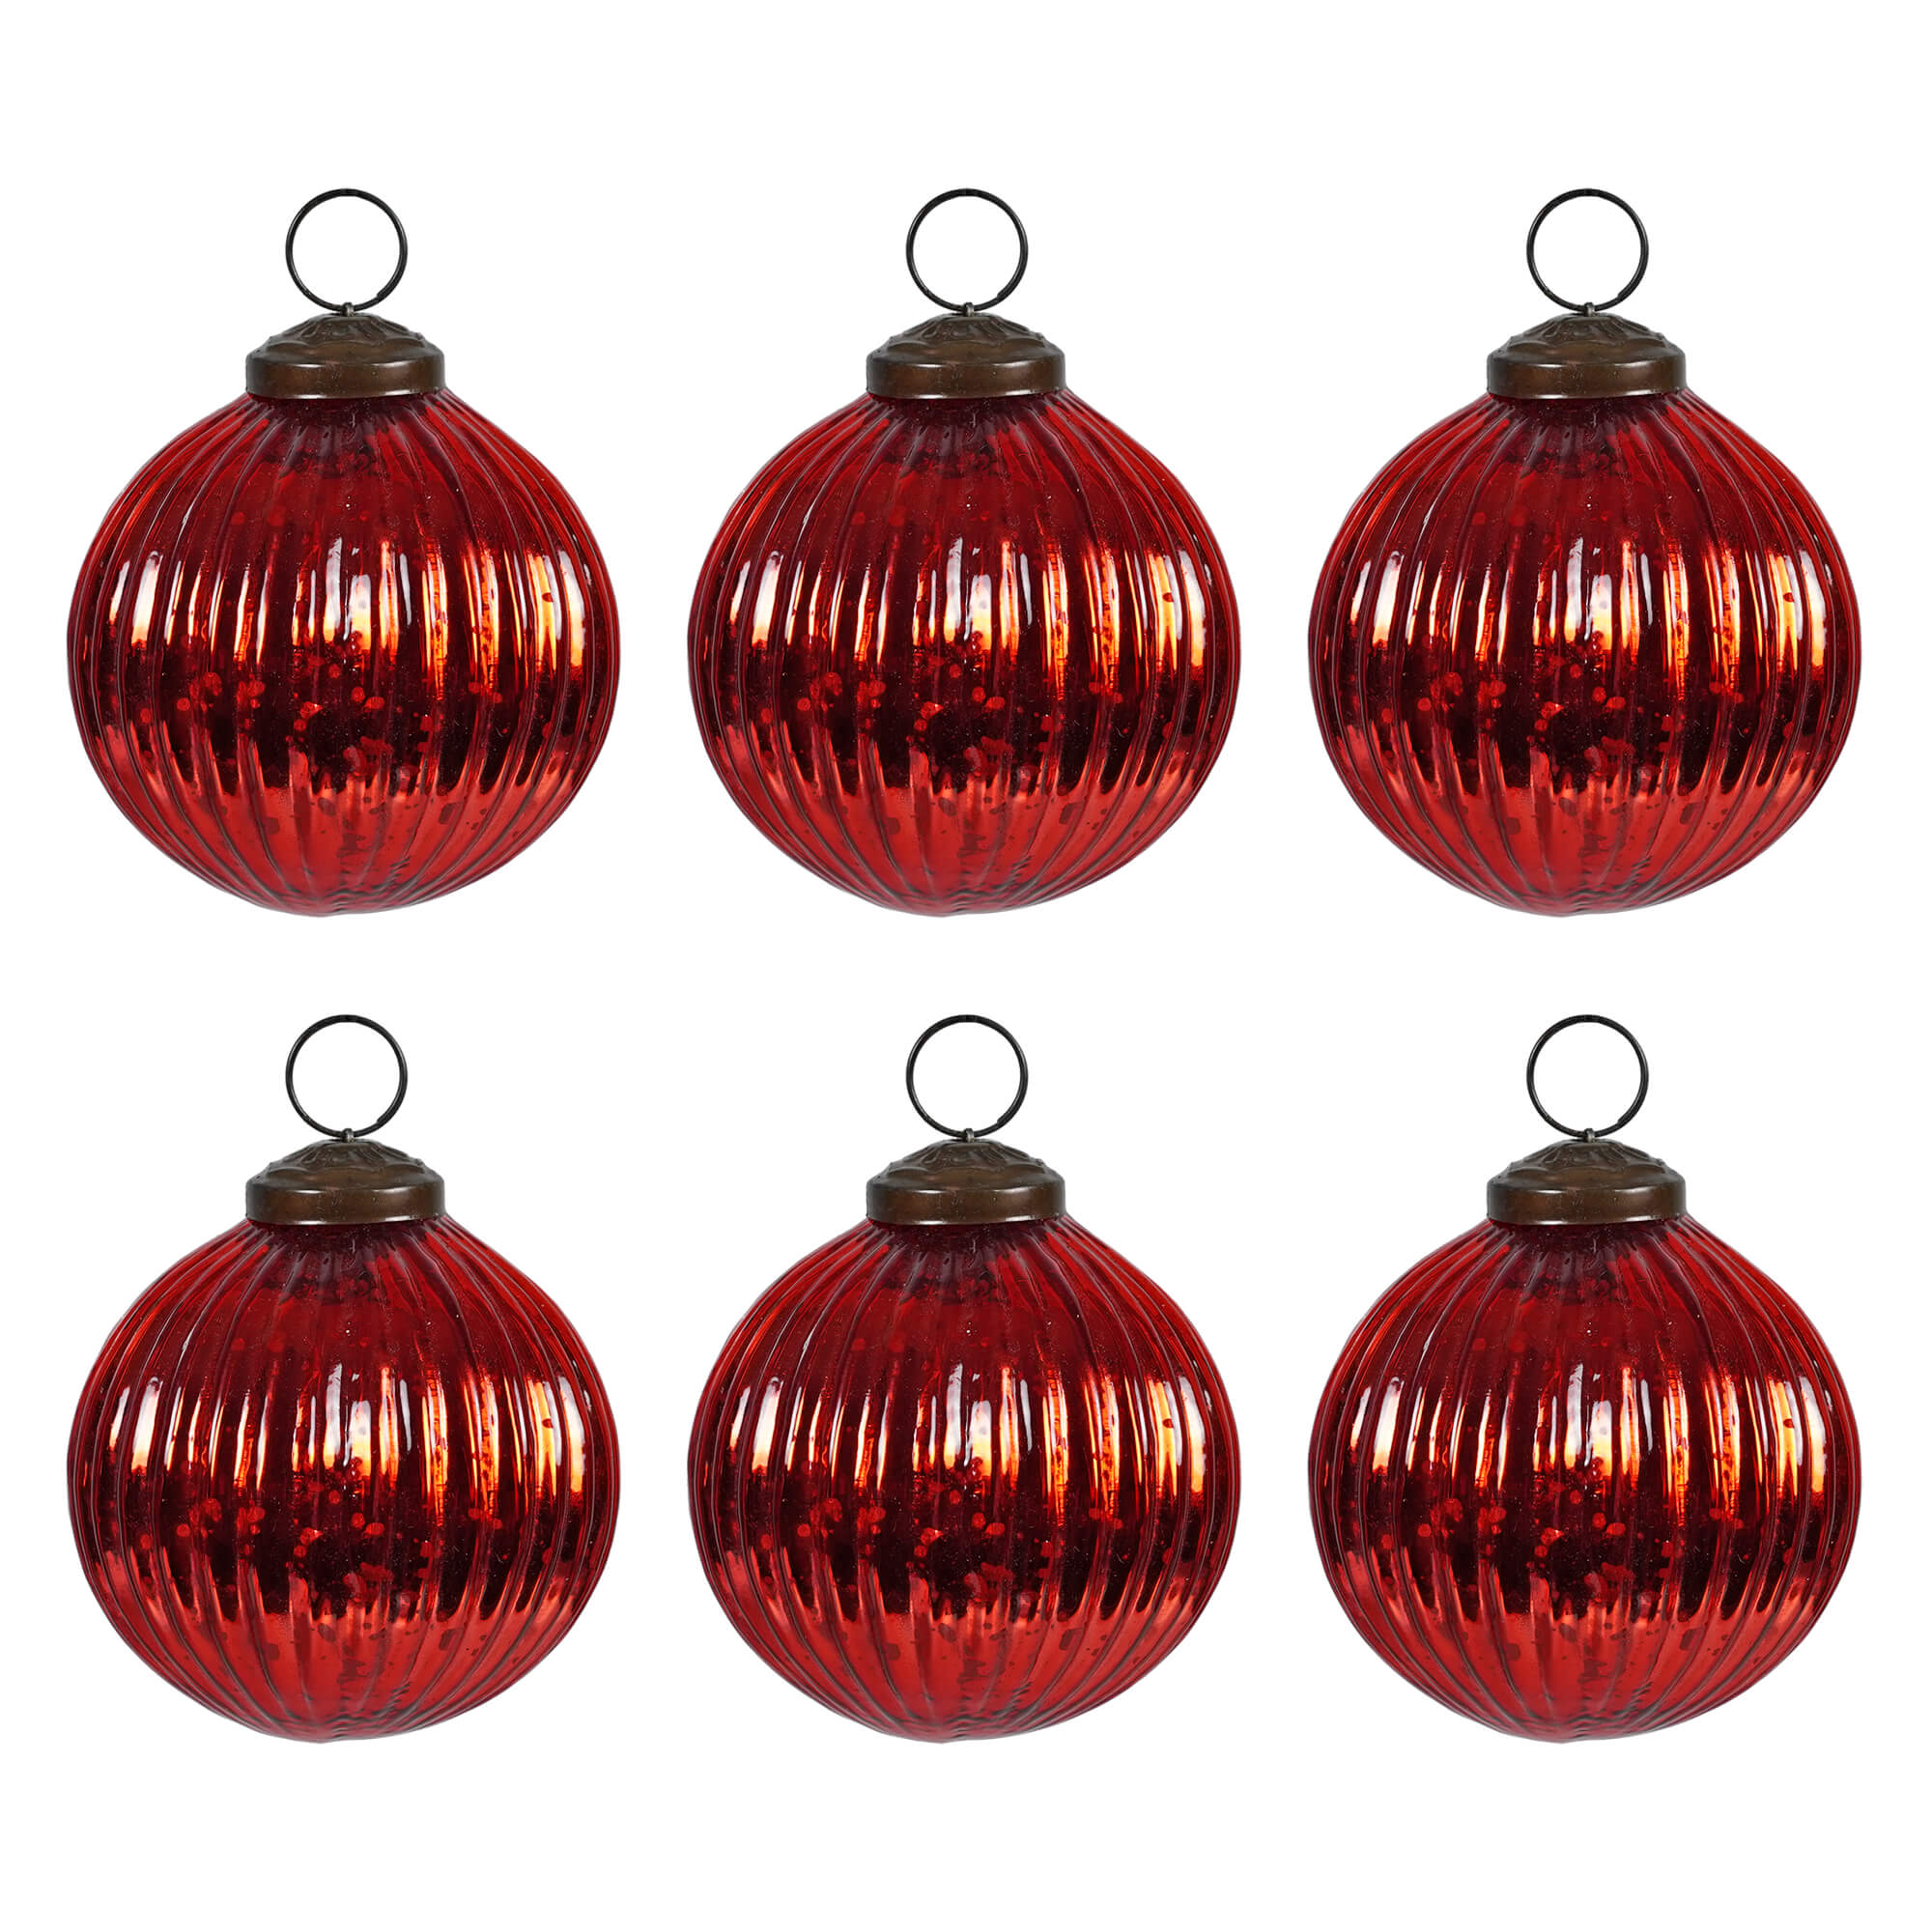 Glass Kugel Ornaments – 400 RS Home & Design